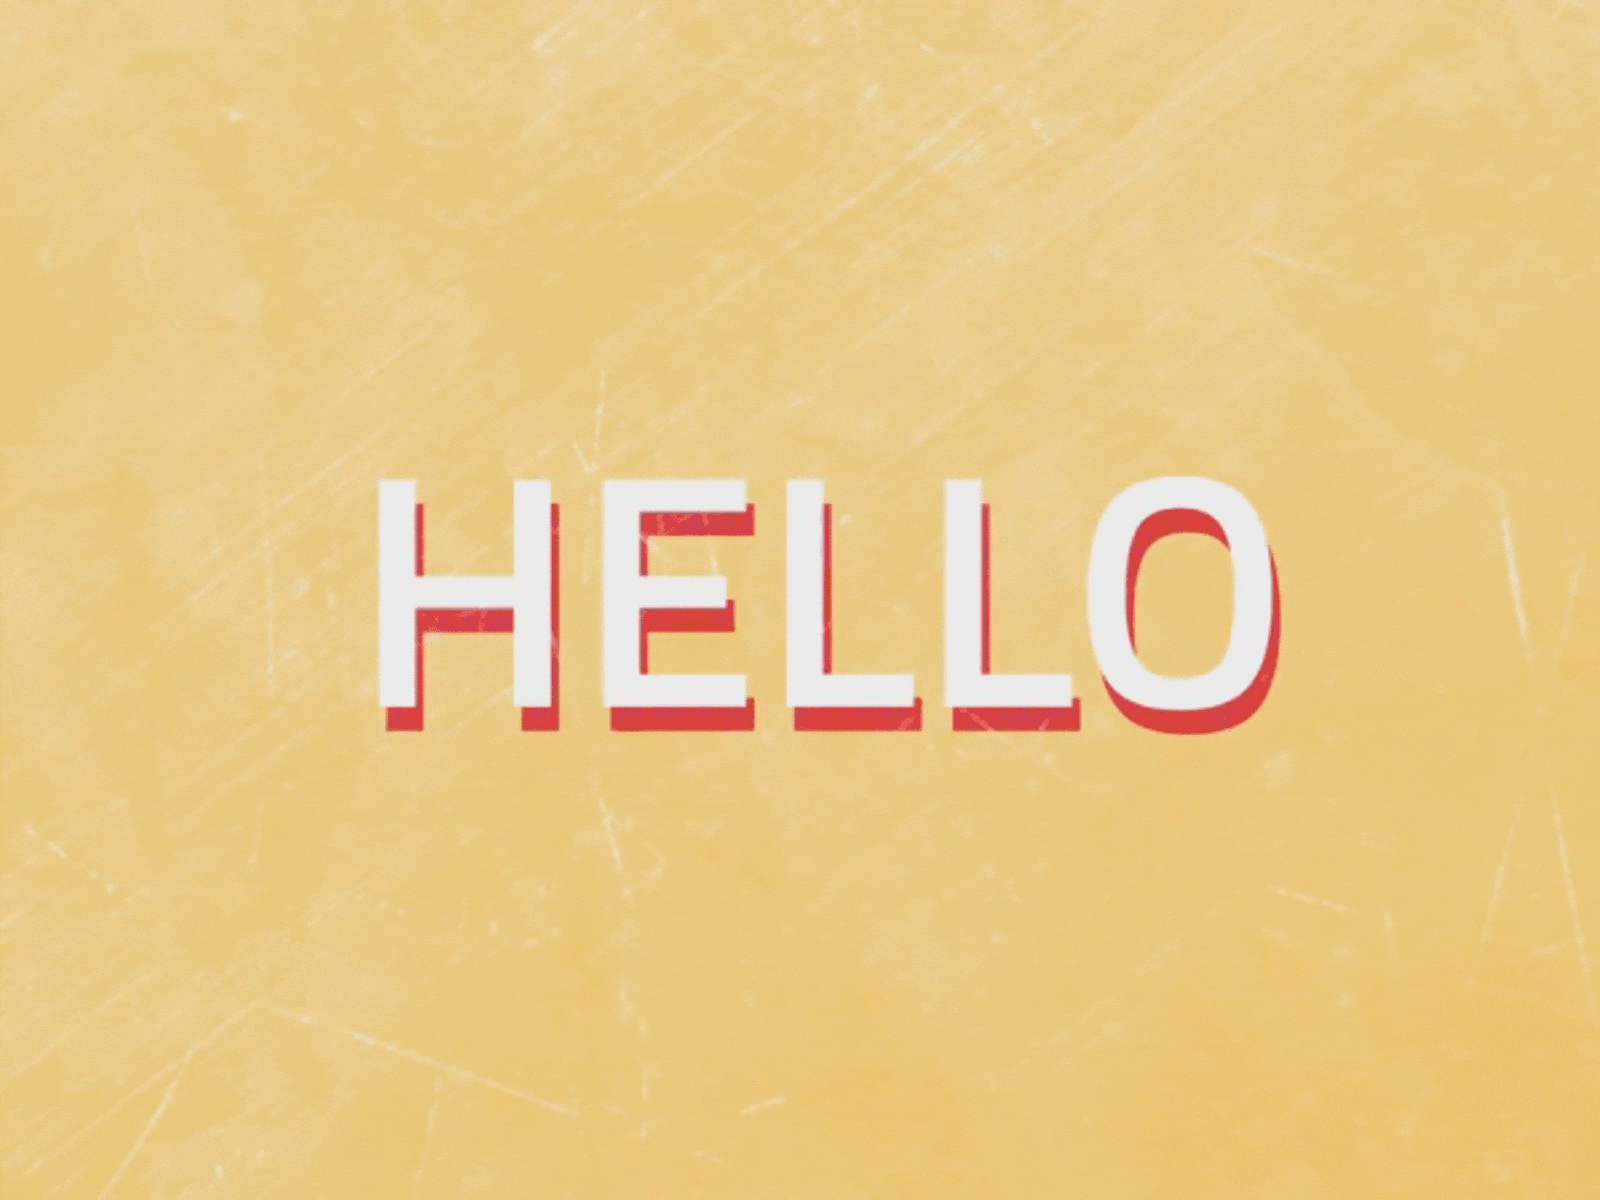 Helloooo! animation gif graphic hello illustration lettering text